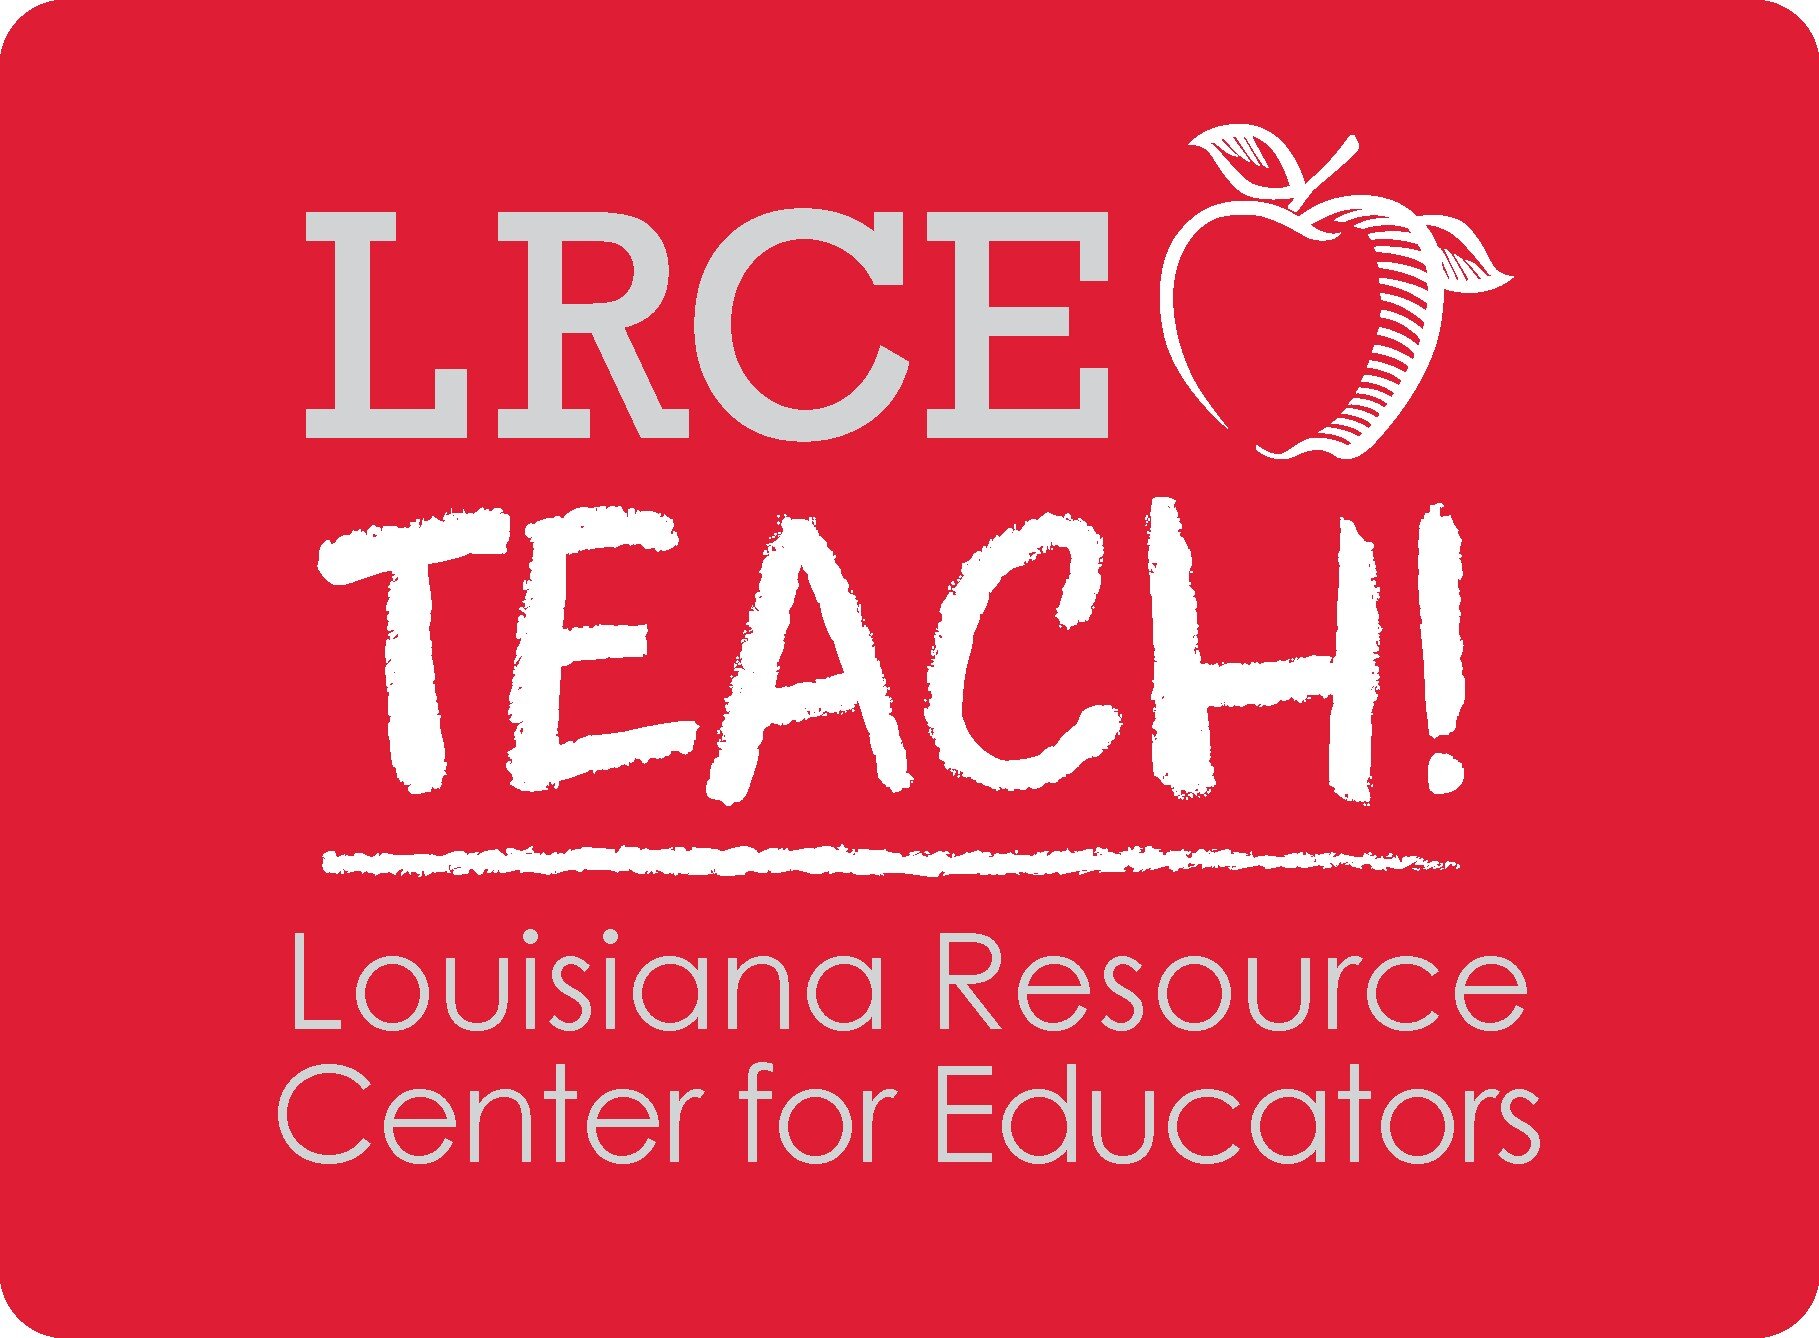 LRCE Teach logo.jpeg